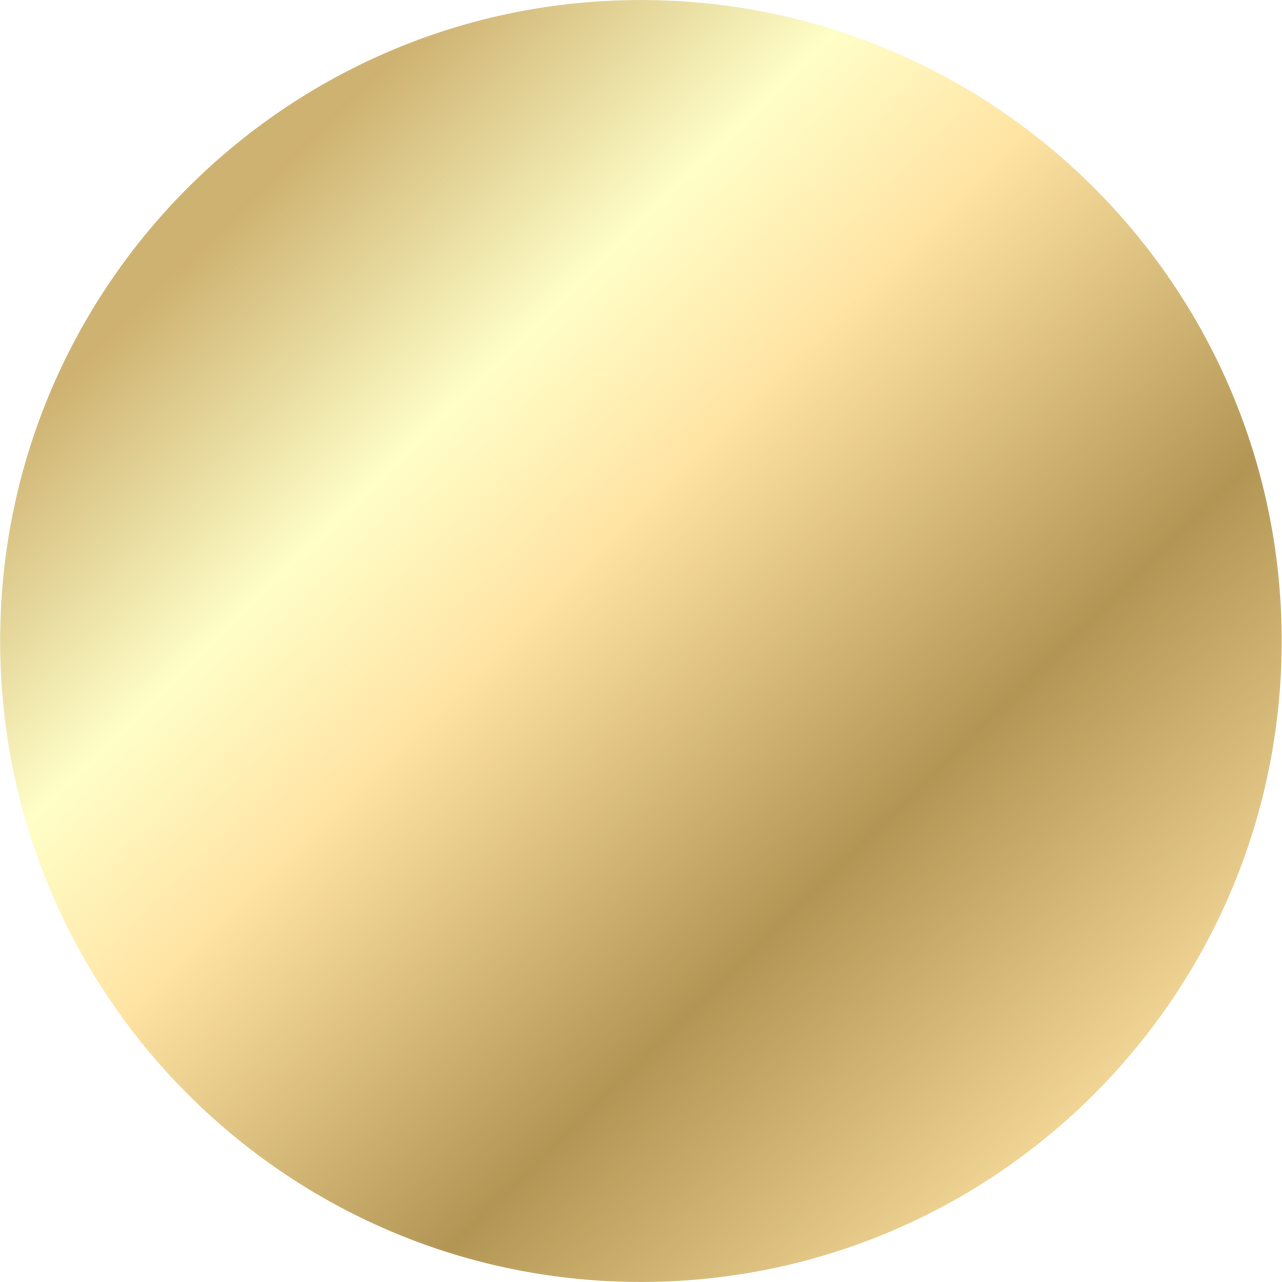 Gold Circle Frame Gradient